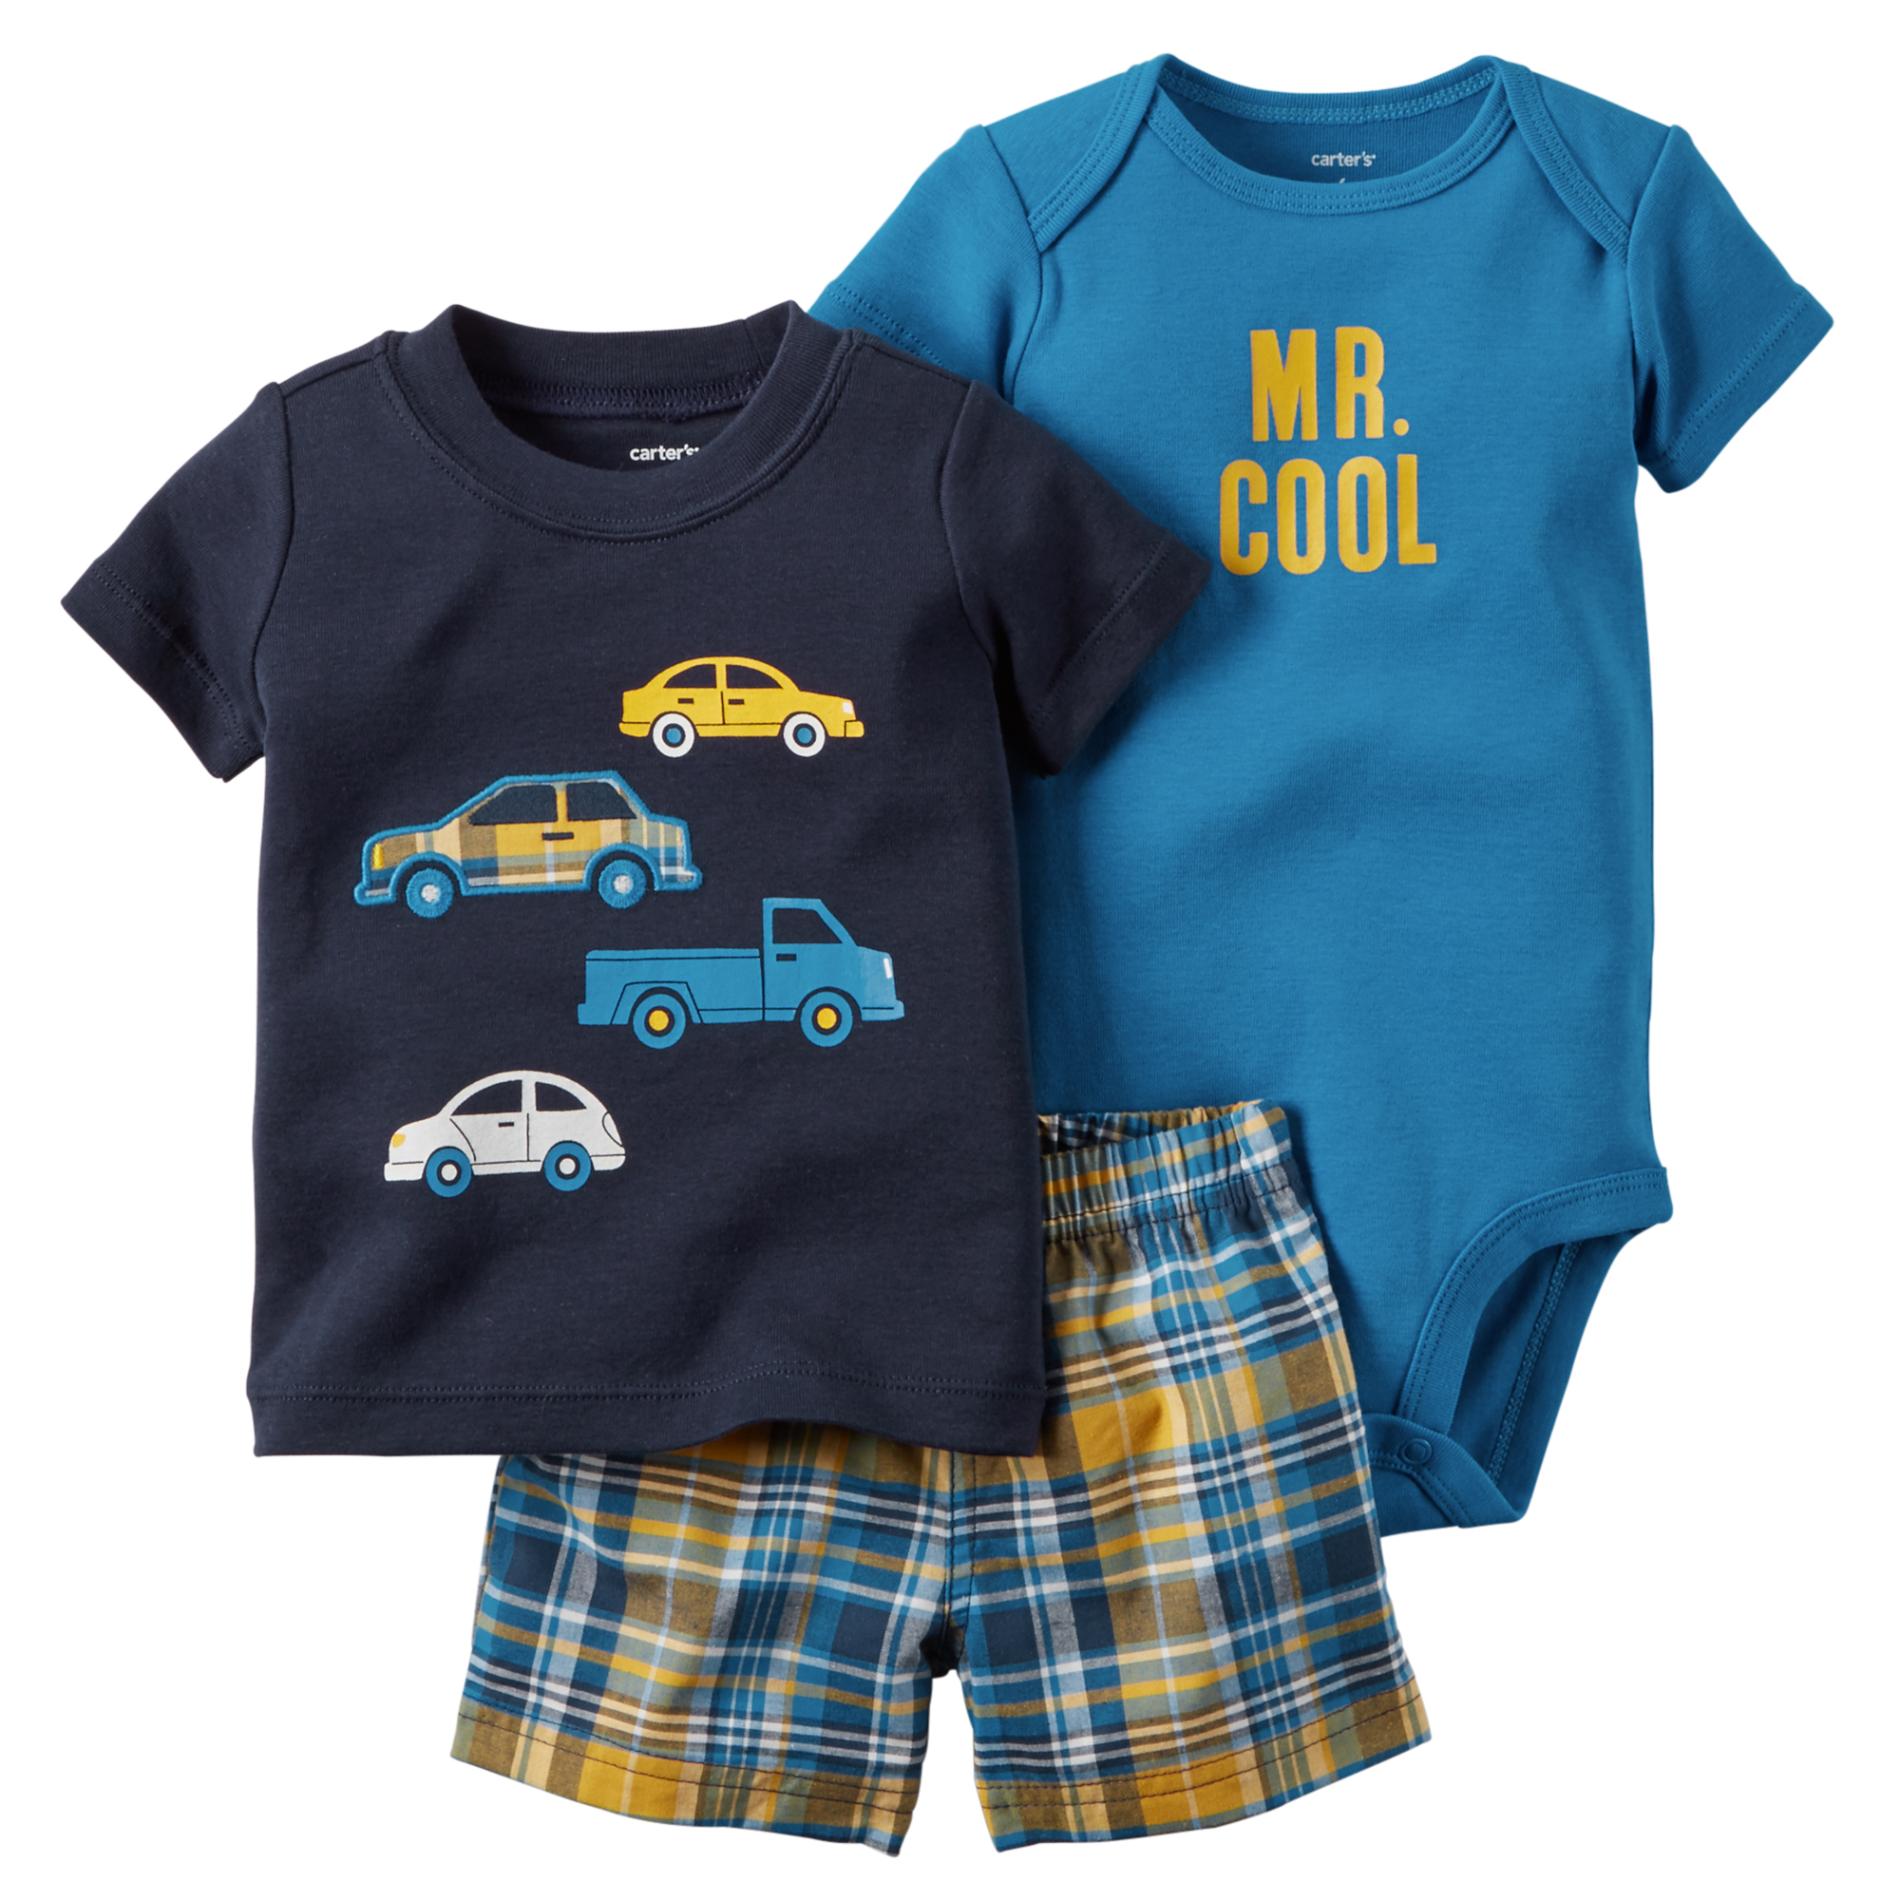 Carter's Newborn & Infant Boy's T-Shirt, Bodysuit & Shorts - Cars